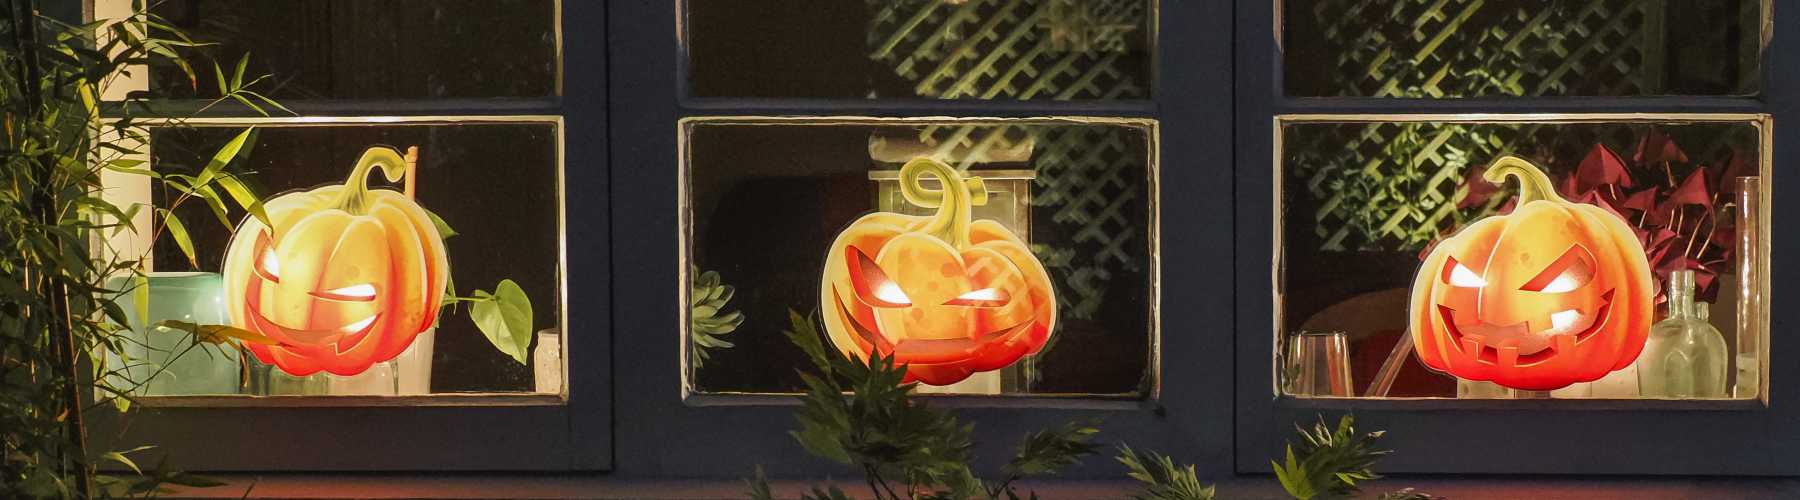 Using Halloween window stickers as spooky window decorations